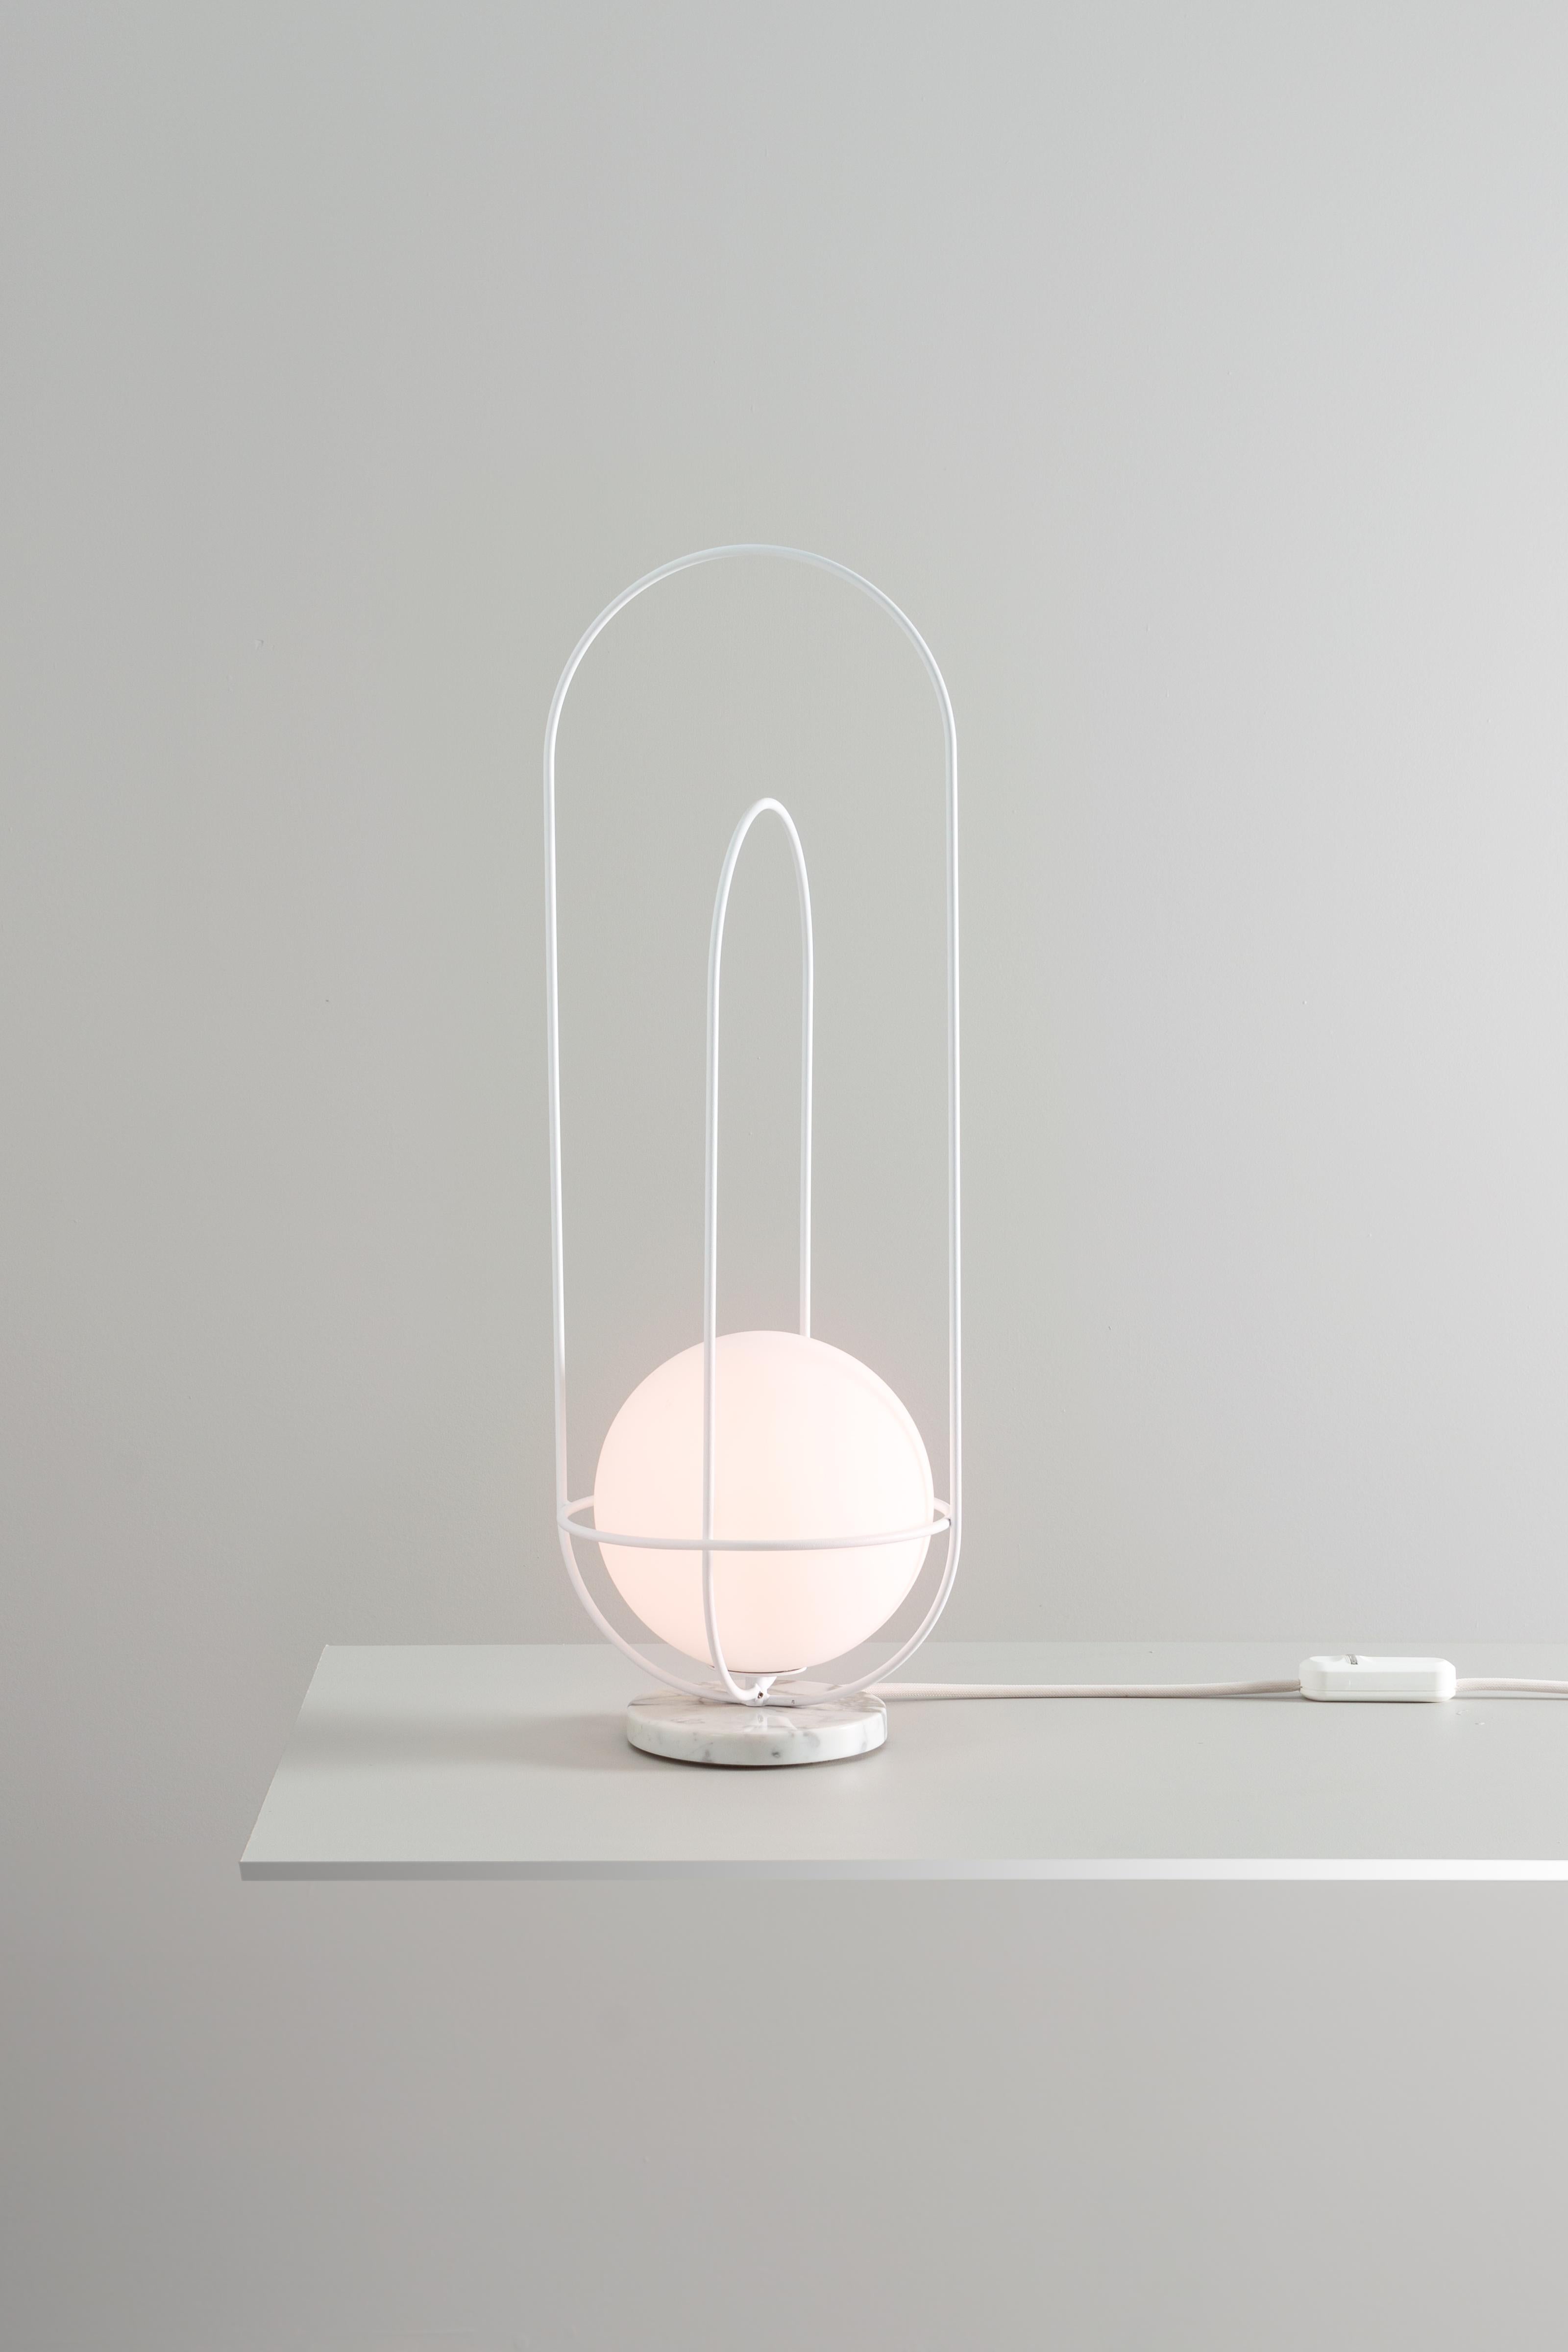 Acier Lampe de bureau contemporaine Orbit, socle en marbre blanc en vente